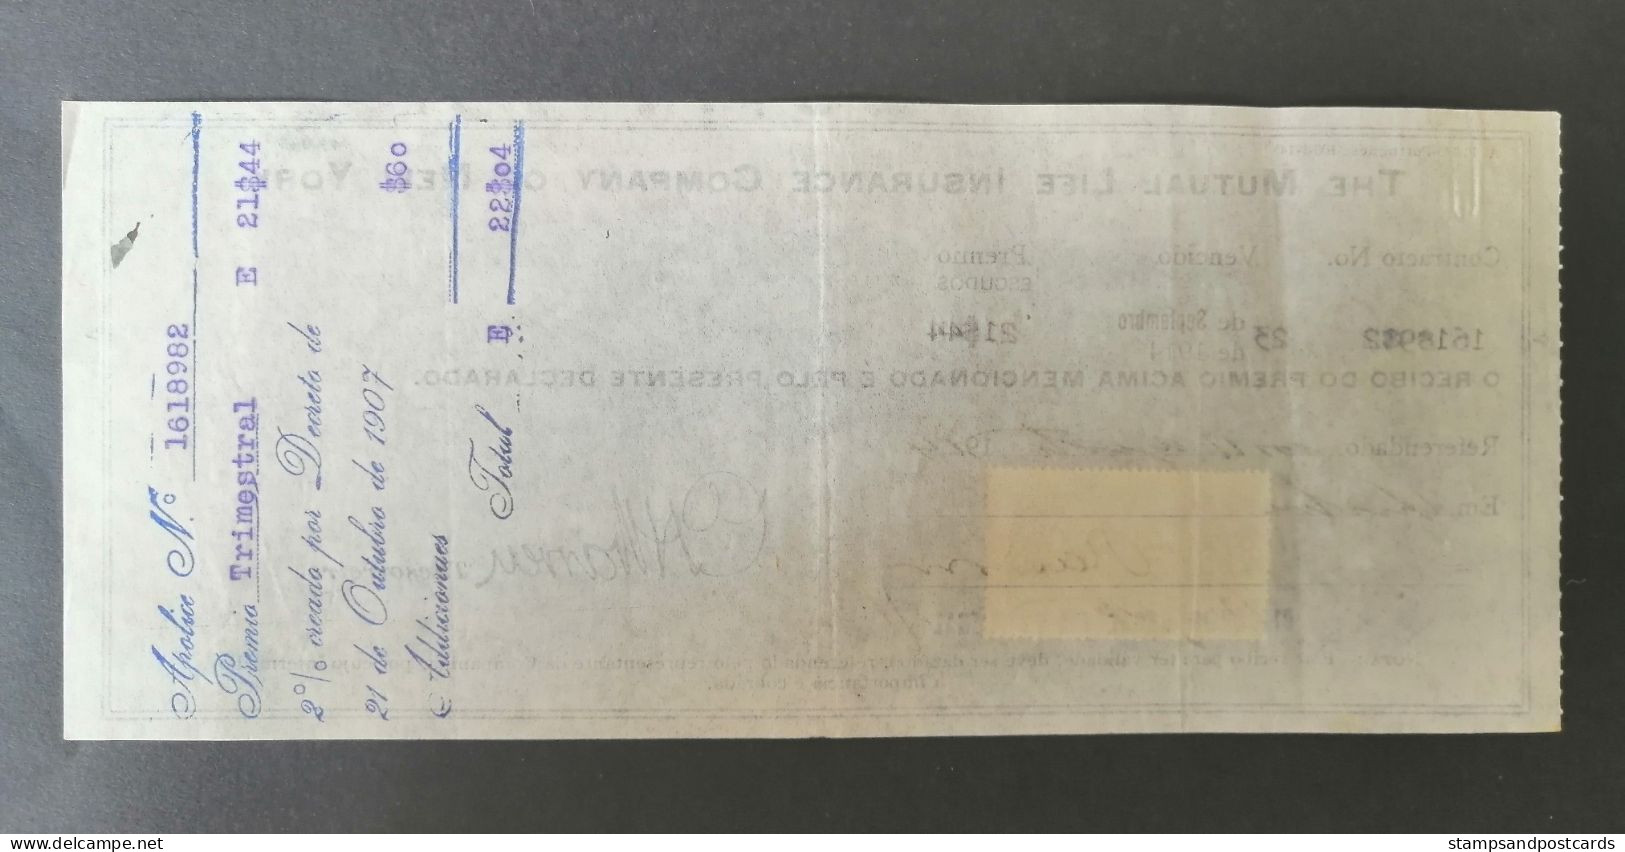 Portugal Facture Assurance Timbre Fiscal 1914 Mutual Life Insurance Co. New York Receipt Revenue Stamp - Briefe U. Dokumente